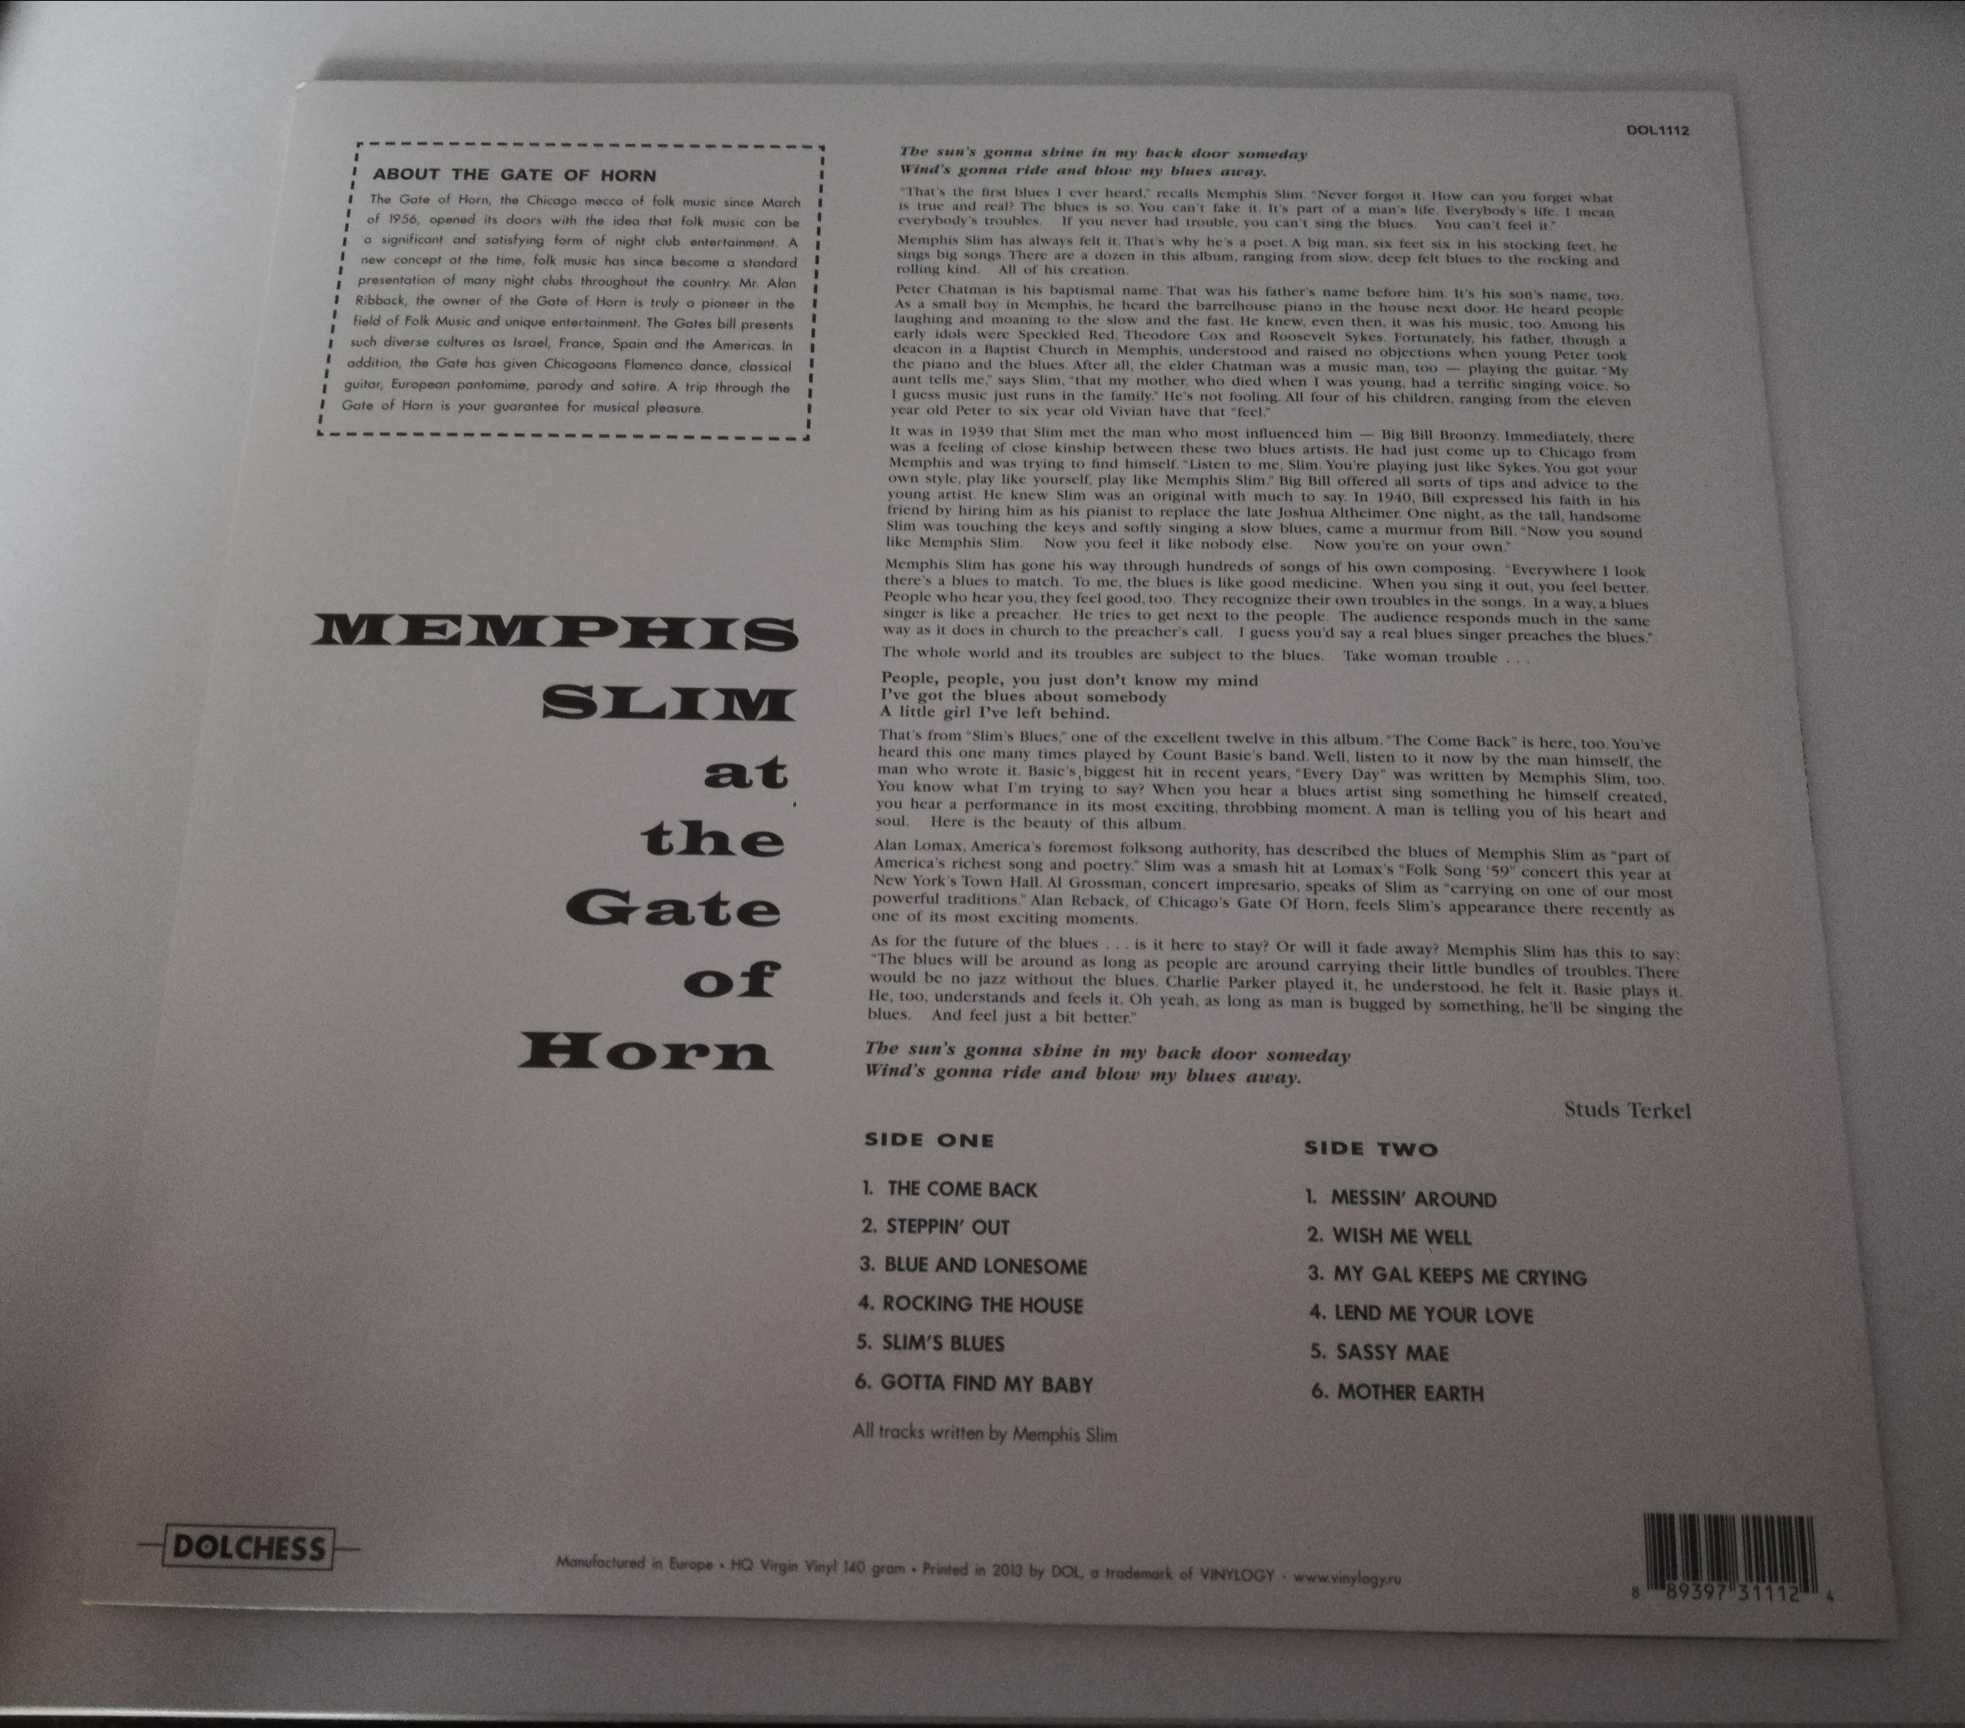 Memphis Slim At The Gate of Horn LP vinyl